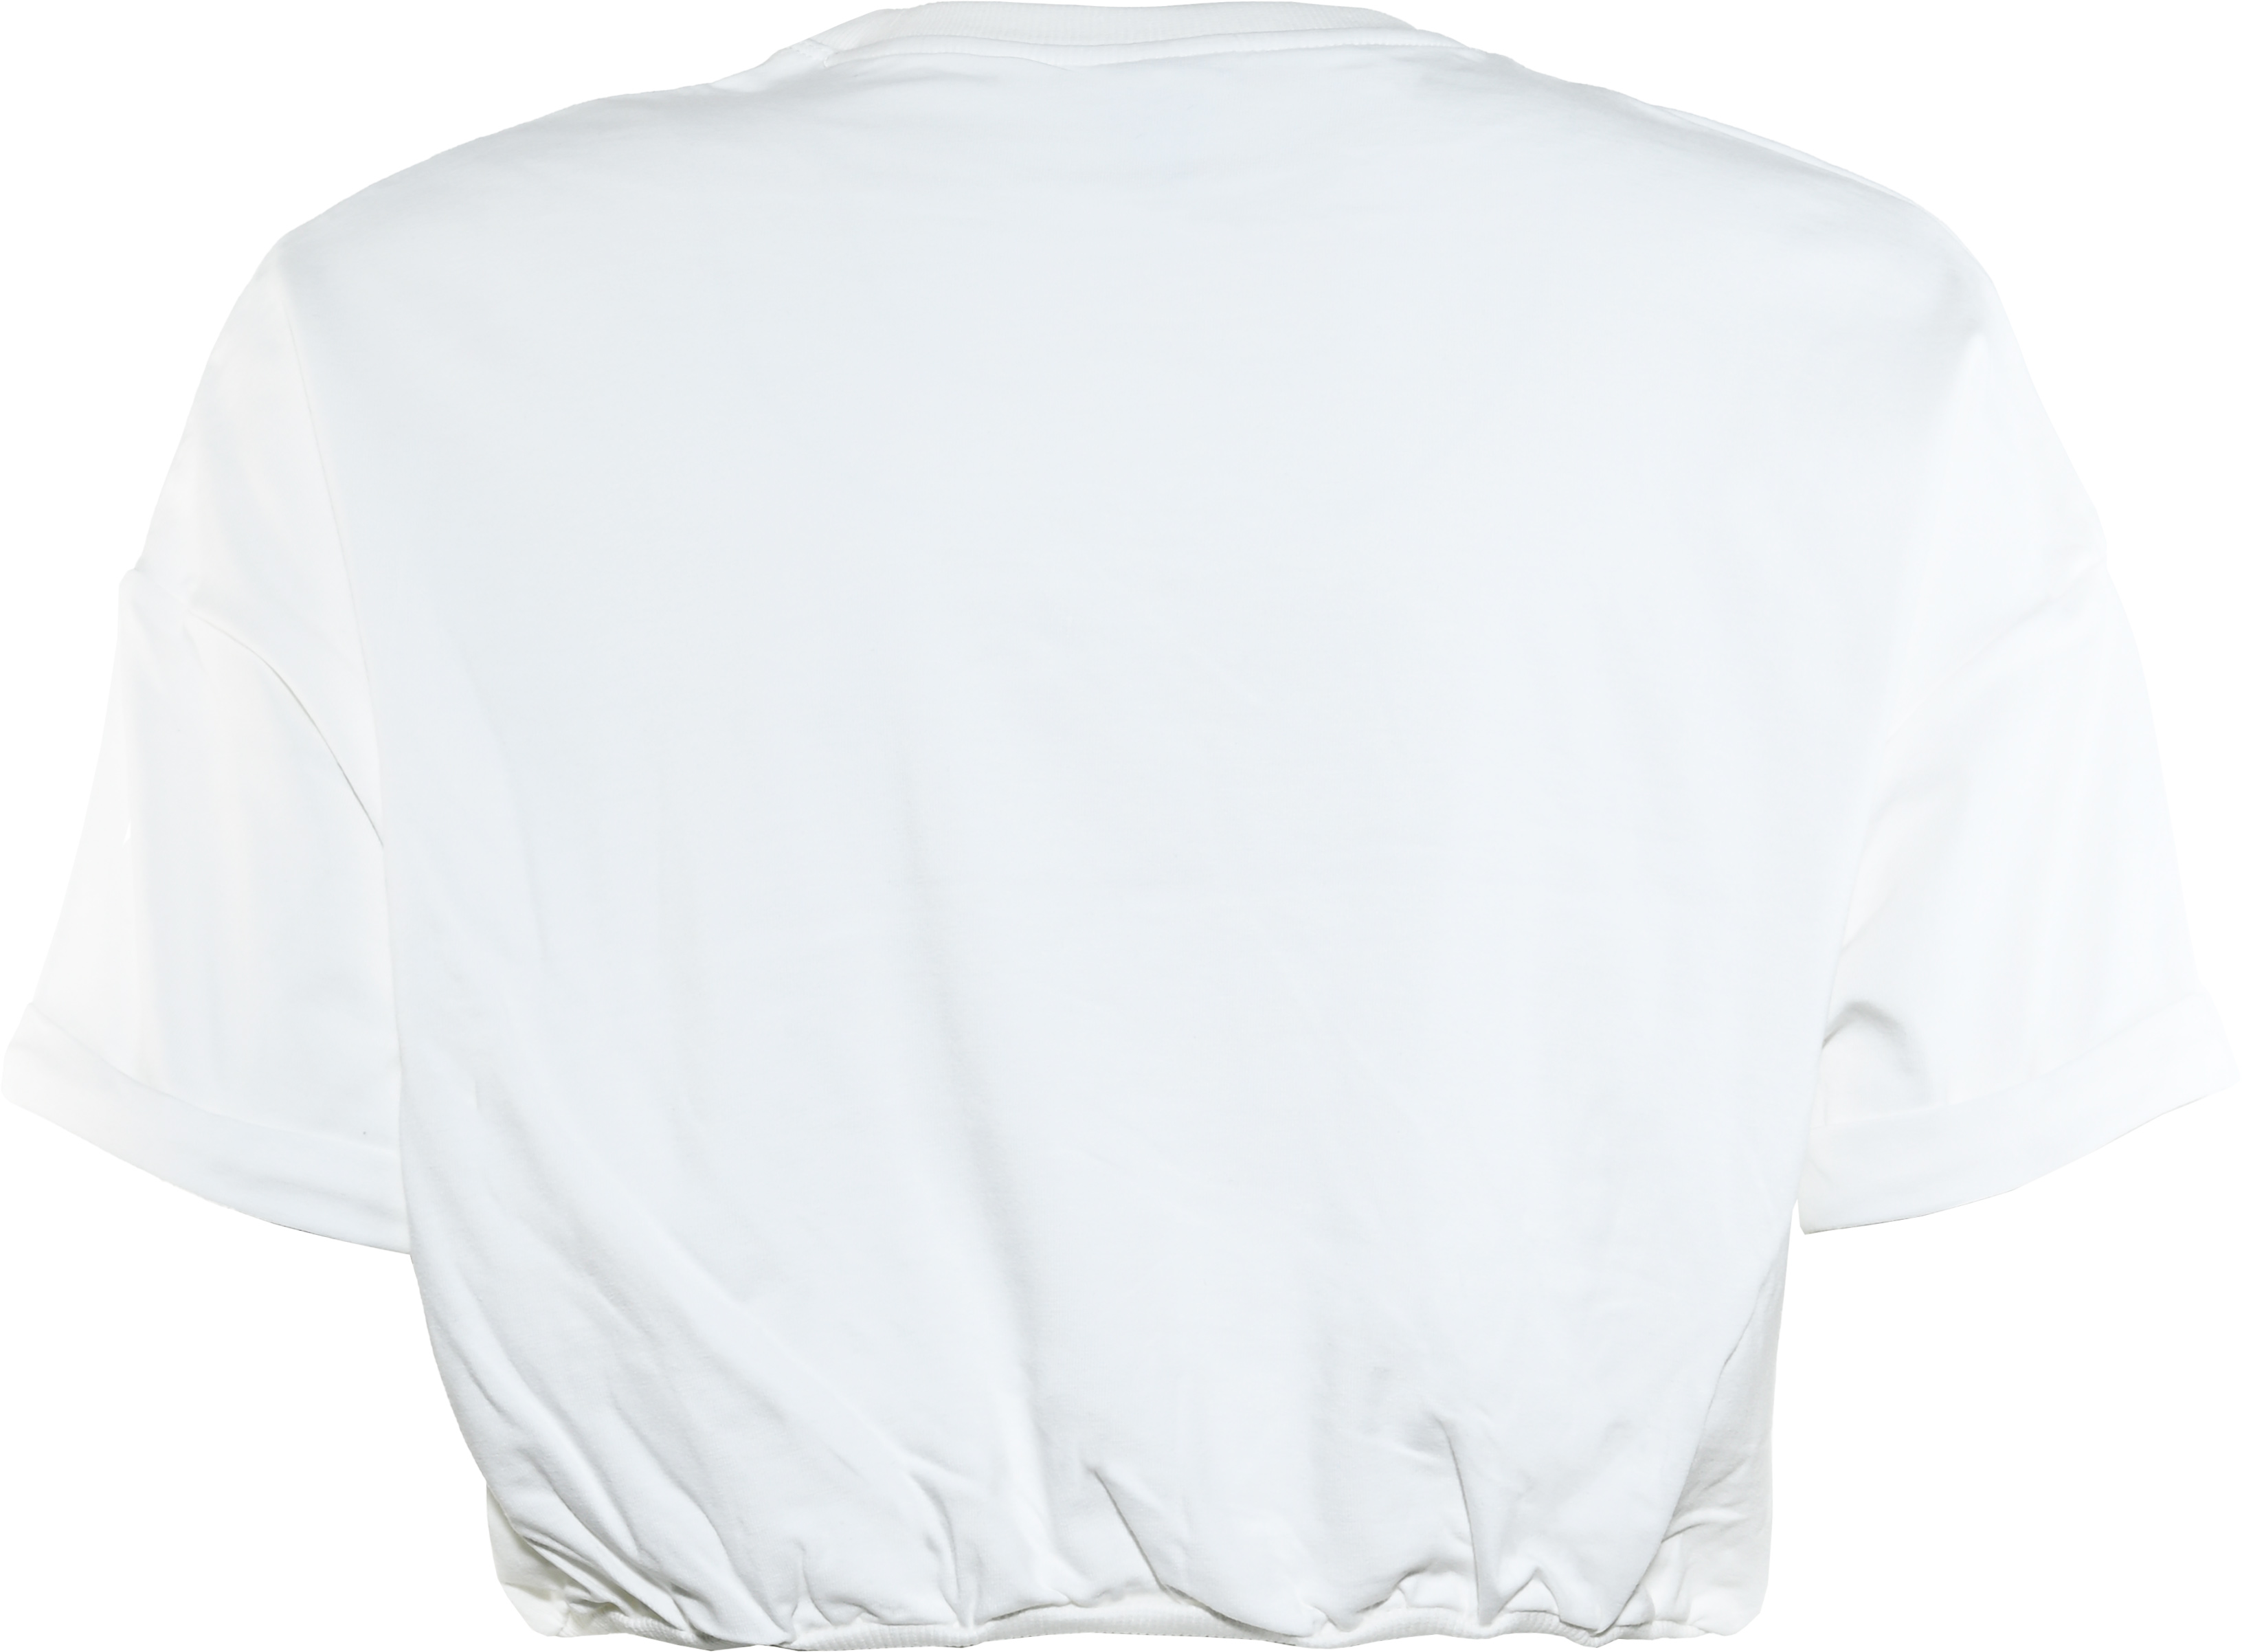 5960-Girls Crop T-Shirt -Good Vibe